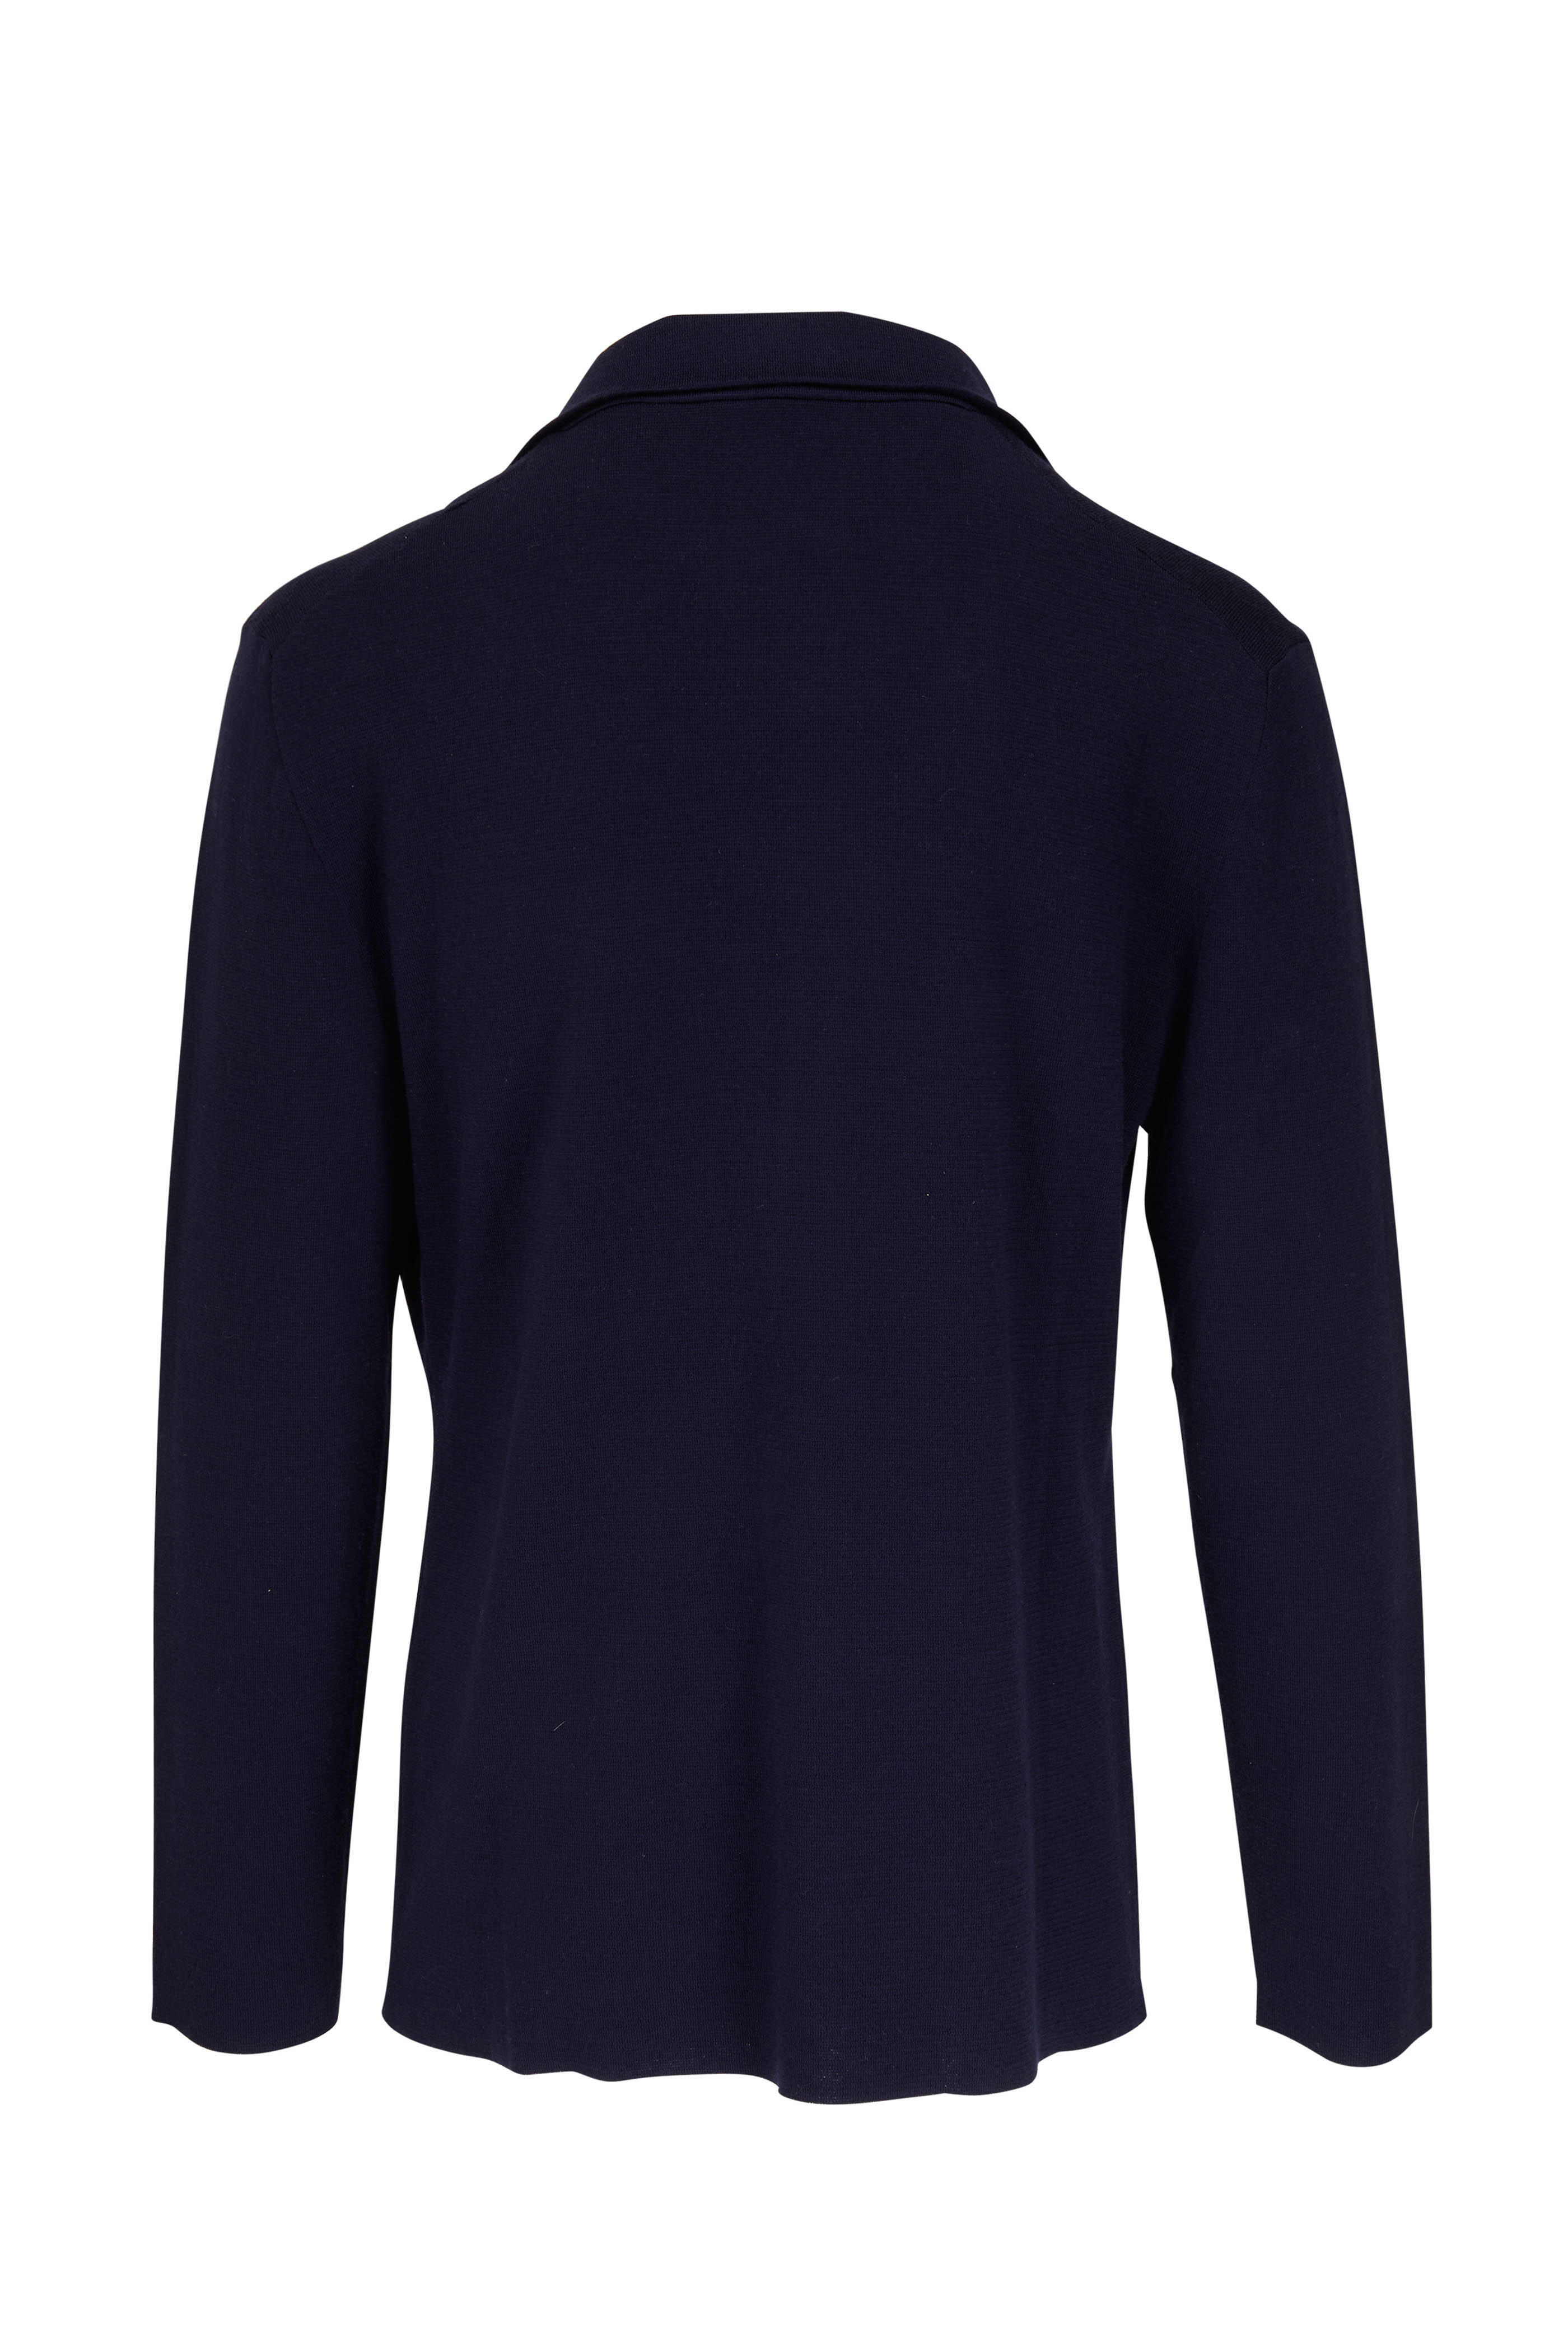 Isaia - Navy Wool, Silk & Cashmere Sweater Jacket